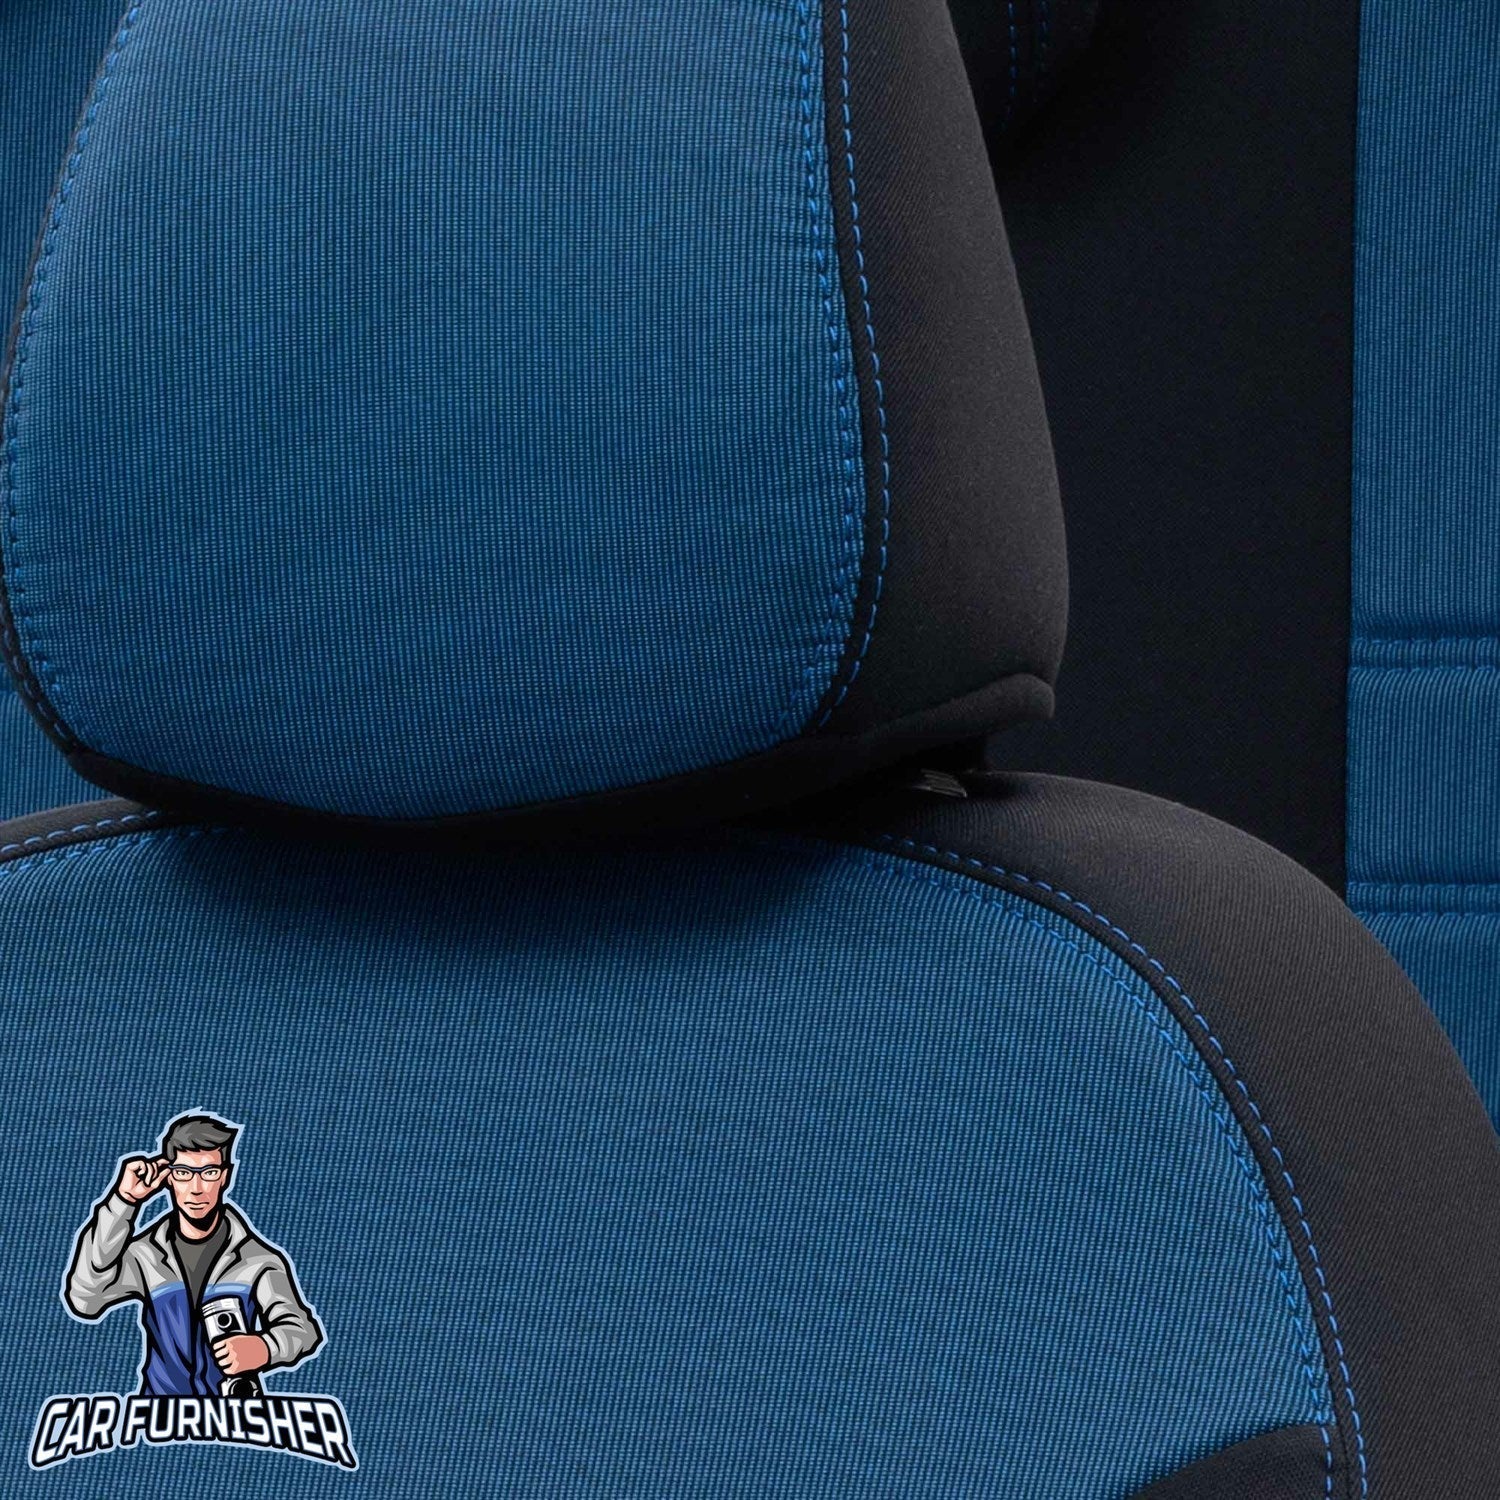 Renault Twingo Seat Cover Original Jacquard Design Blue Jacquard Fabric